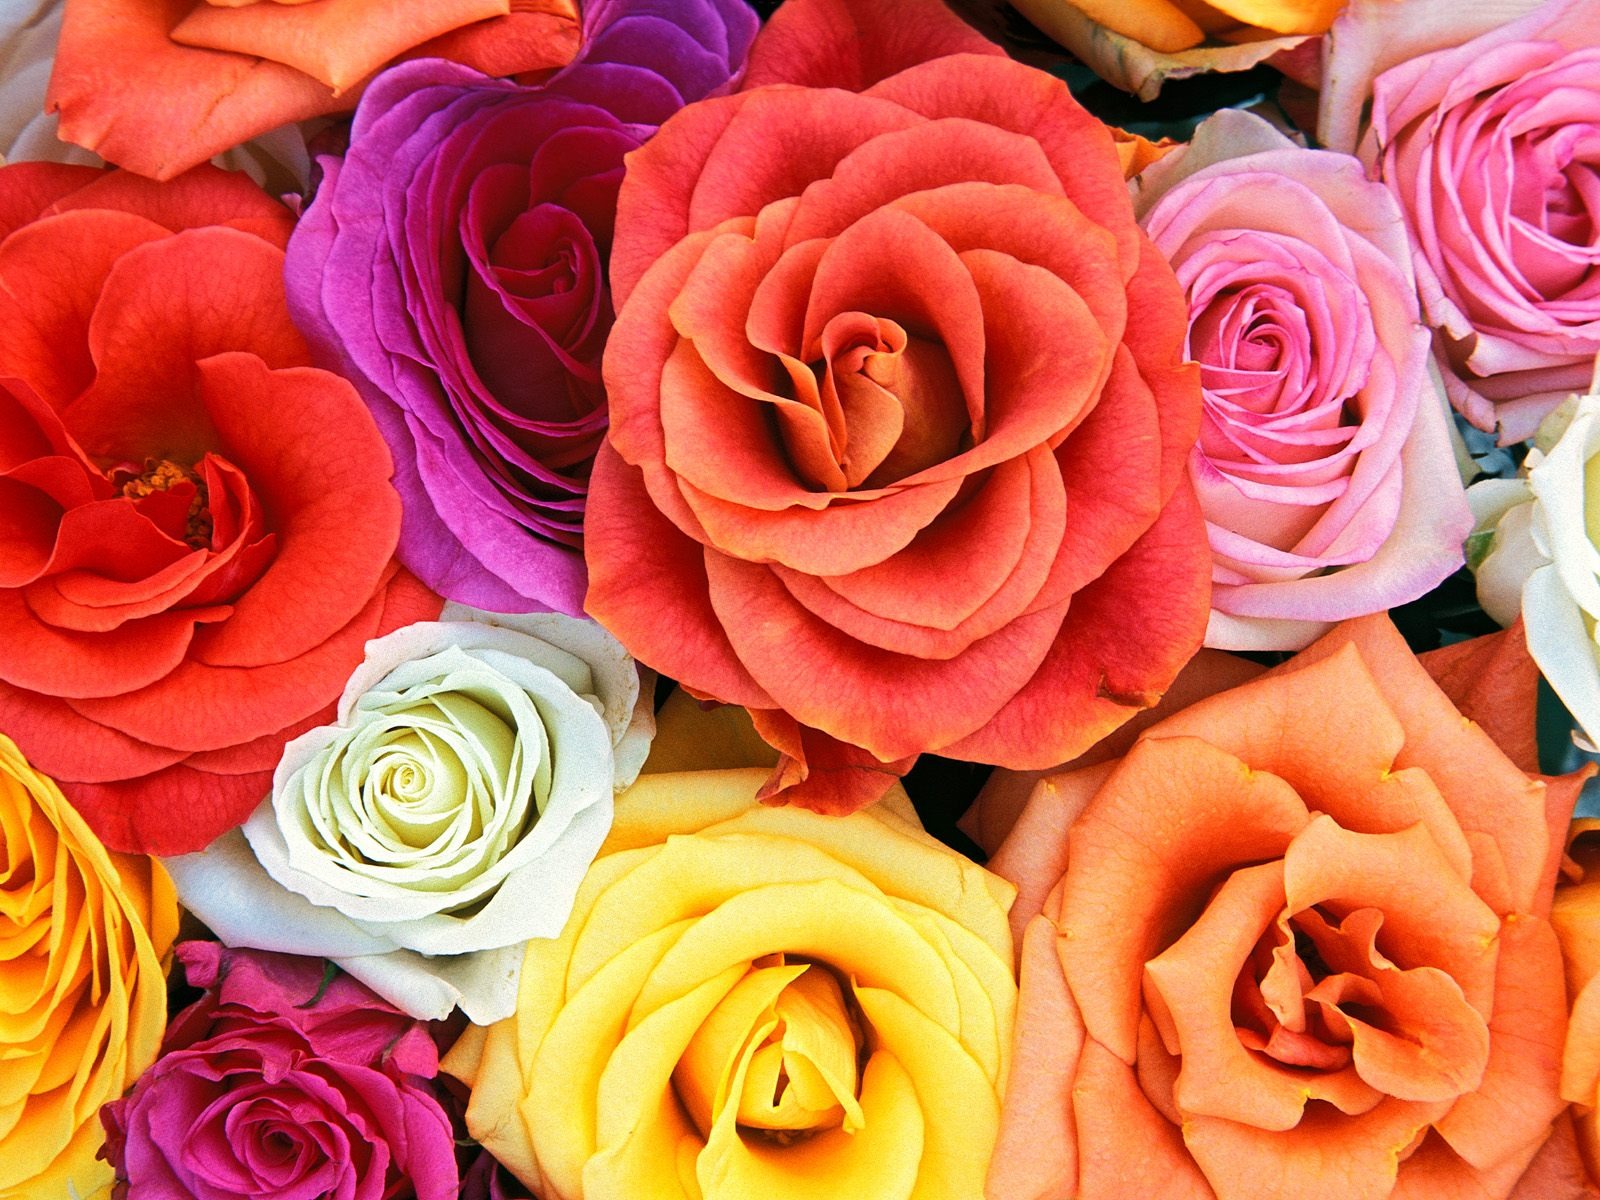 Shiny Golden Roses Wallpapers, Rose Flower Images, - Roses Red Pink Orange - HD Wallpaper 